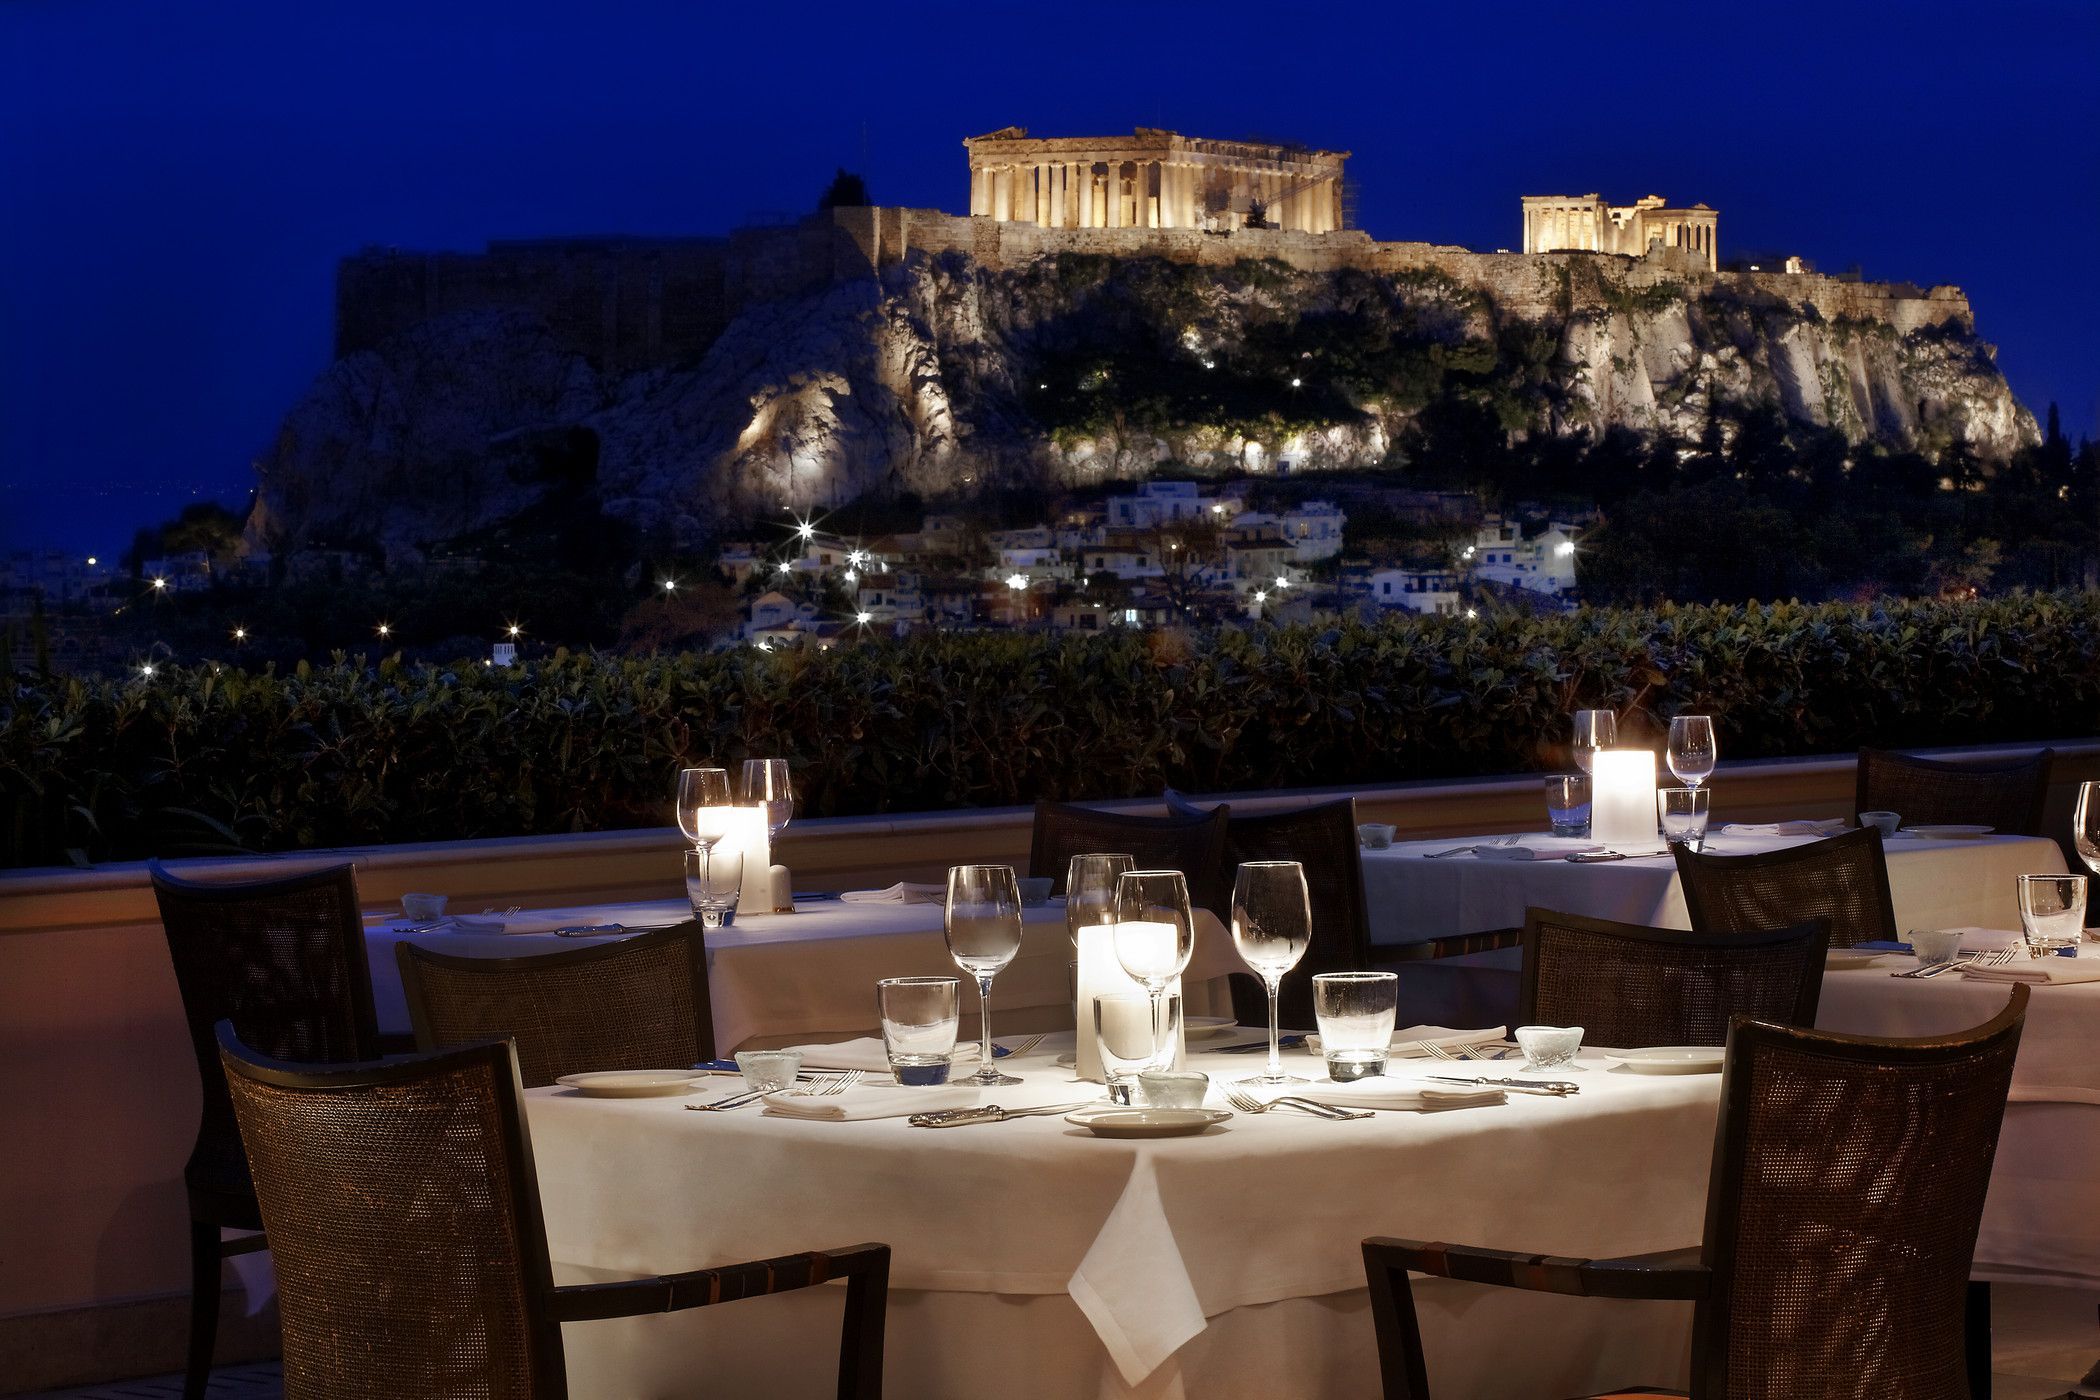 GB Roof Garden restaurant of Hotel Grande Bretagne in Athens, Greece.